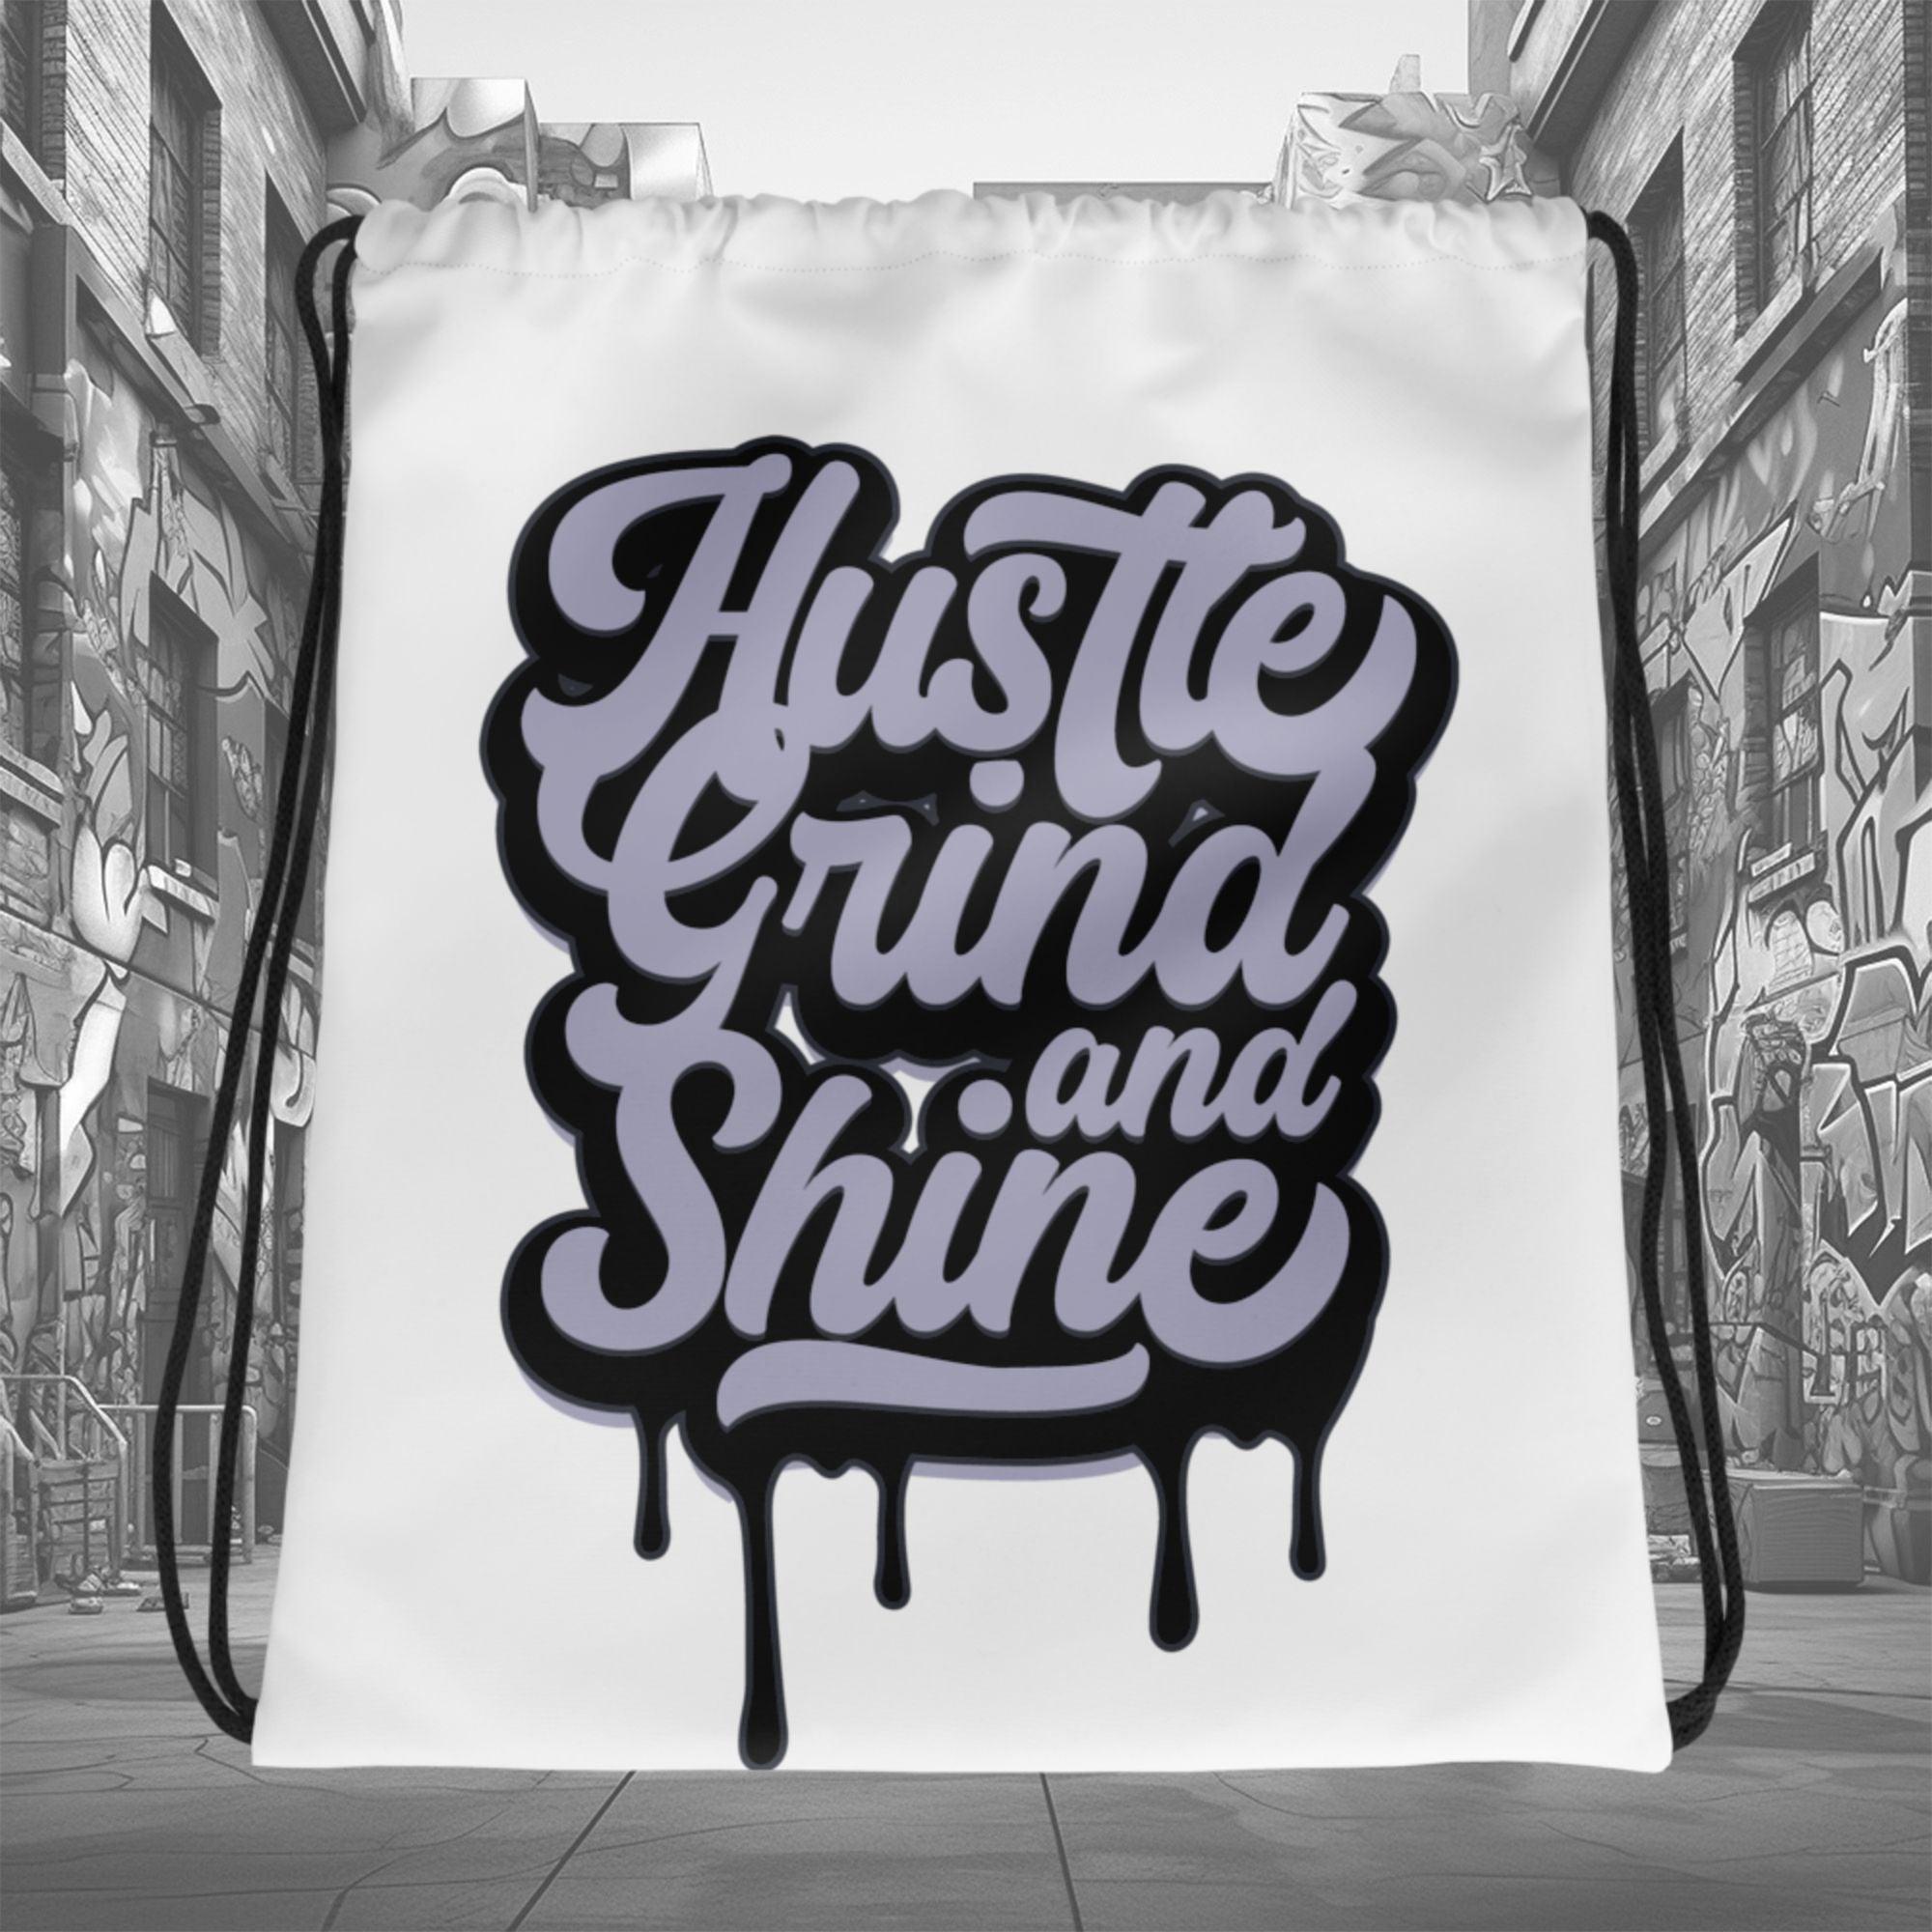 Amazing White Hustle Grind and Shine Drawstring Bag Air Jordan 8 Winterized photo.